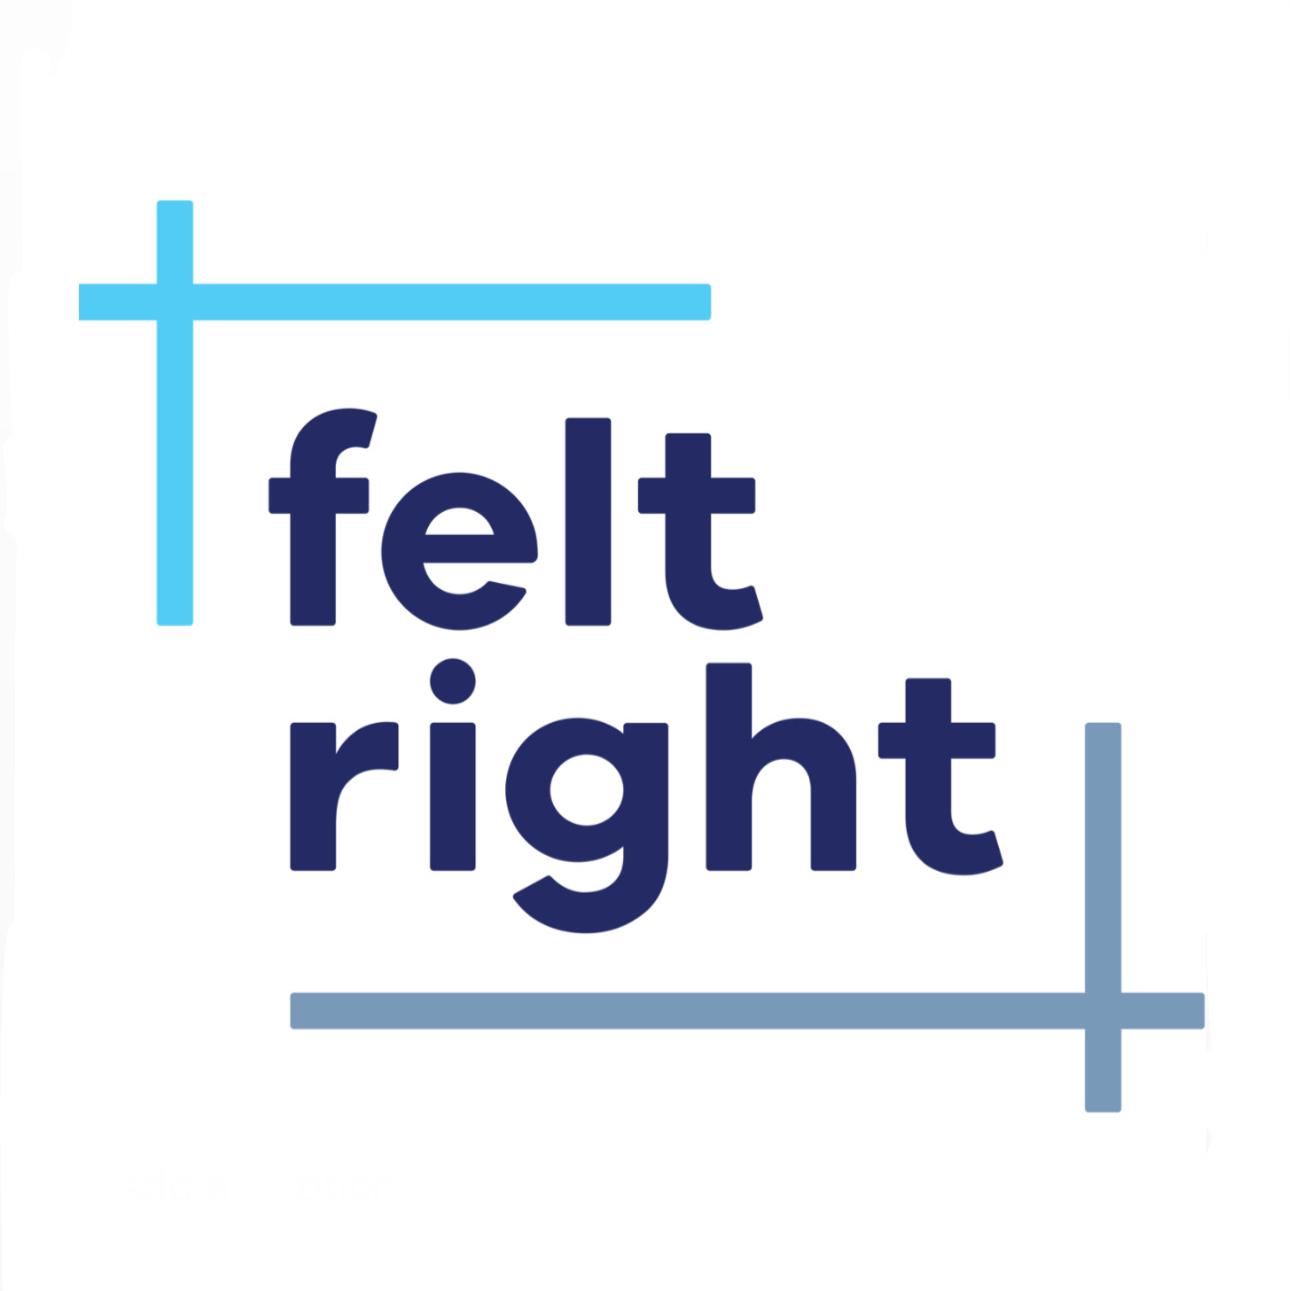 Felt Right's images